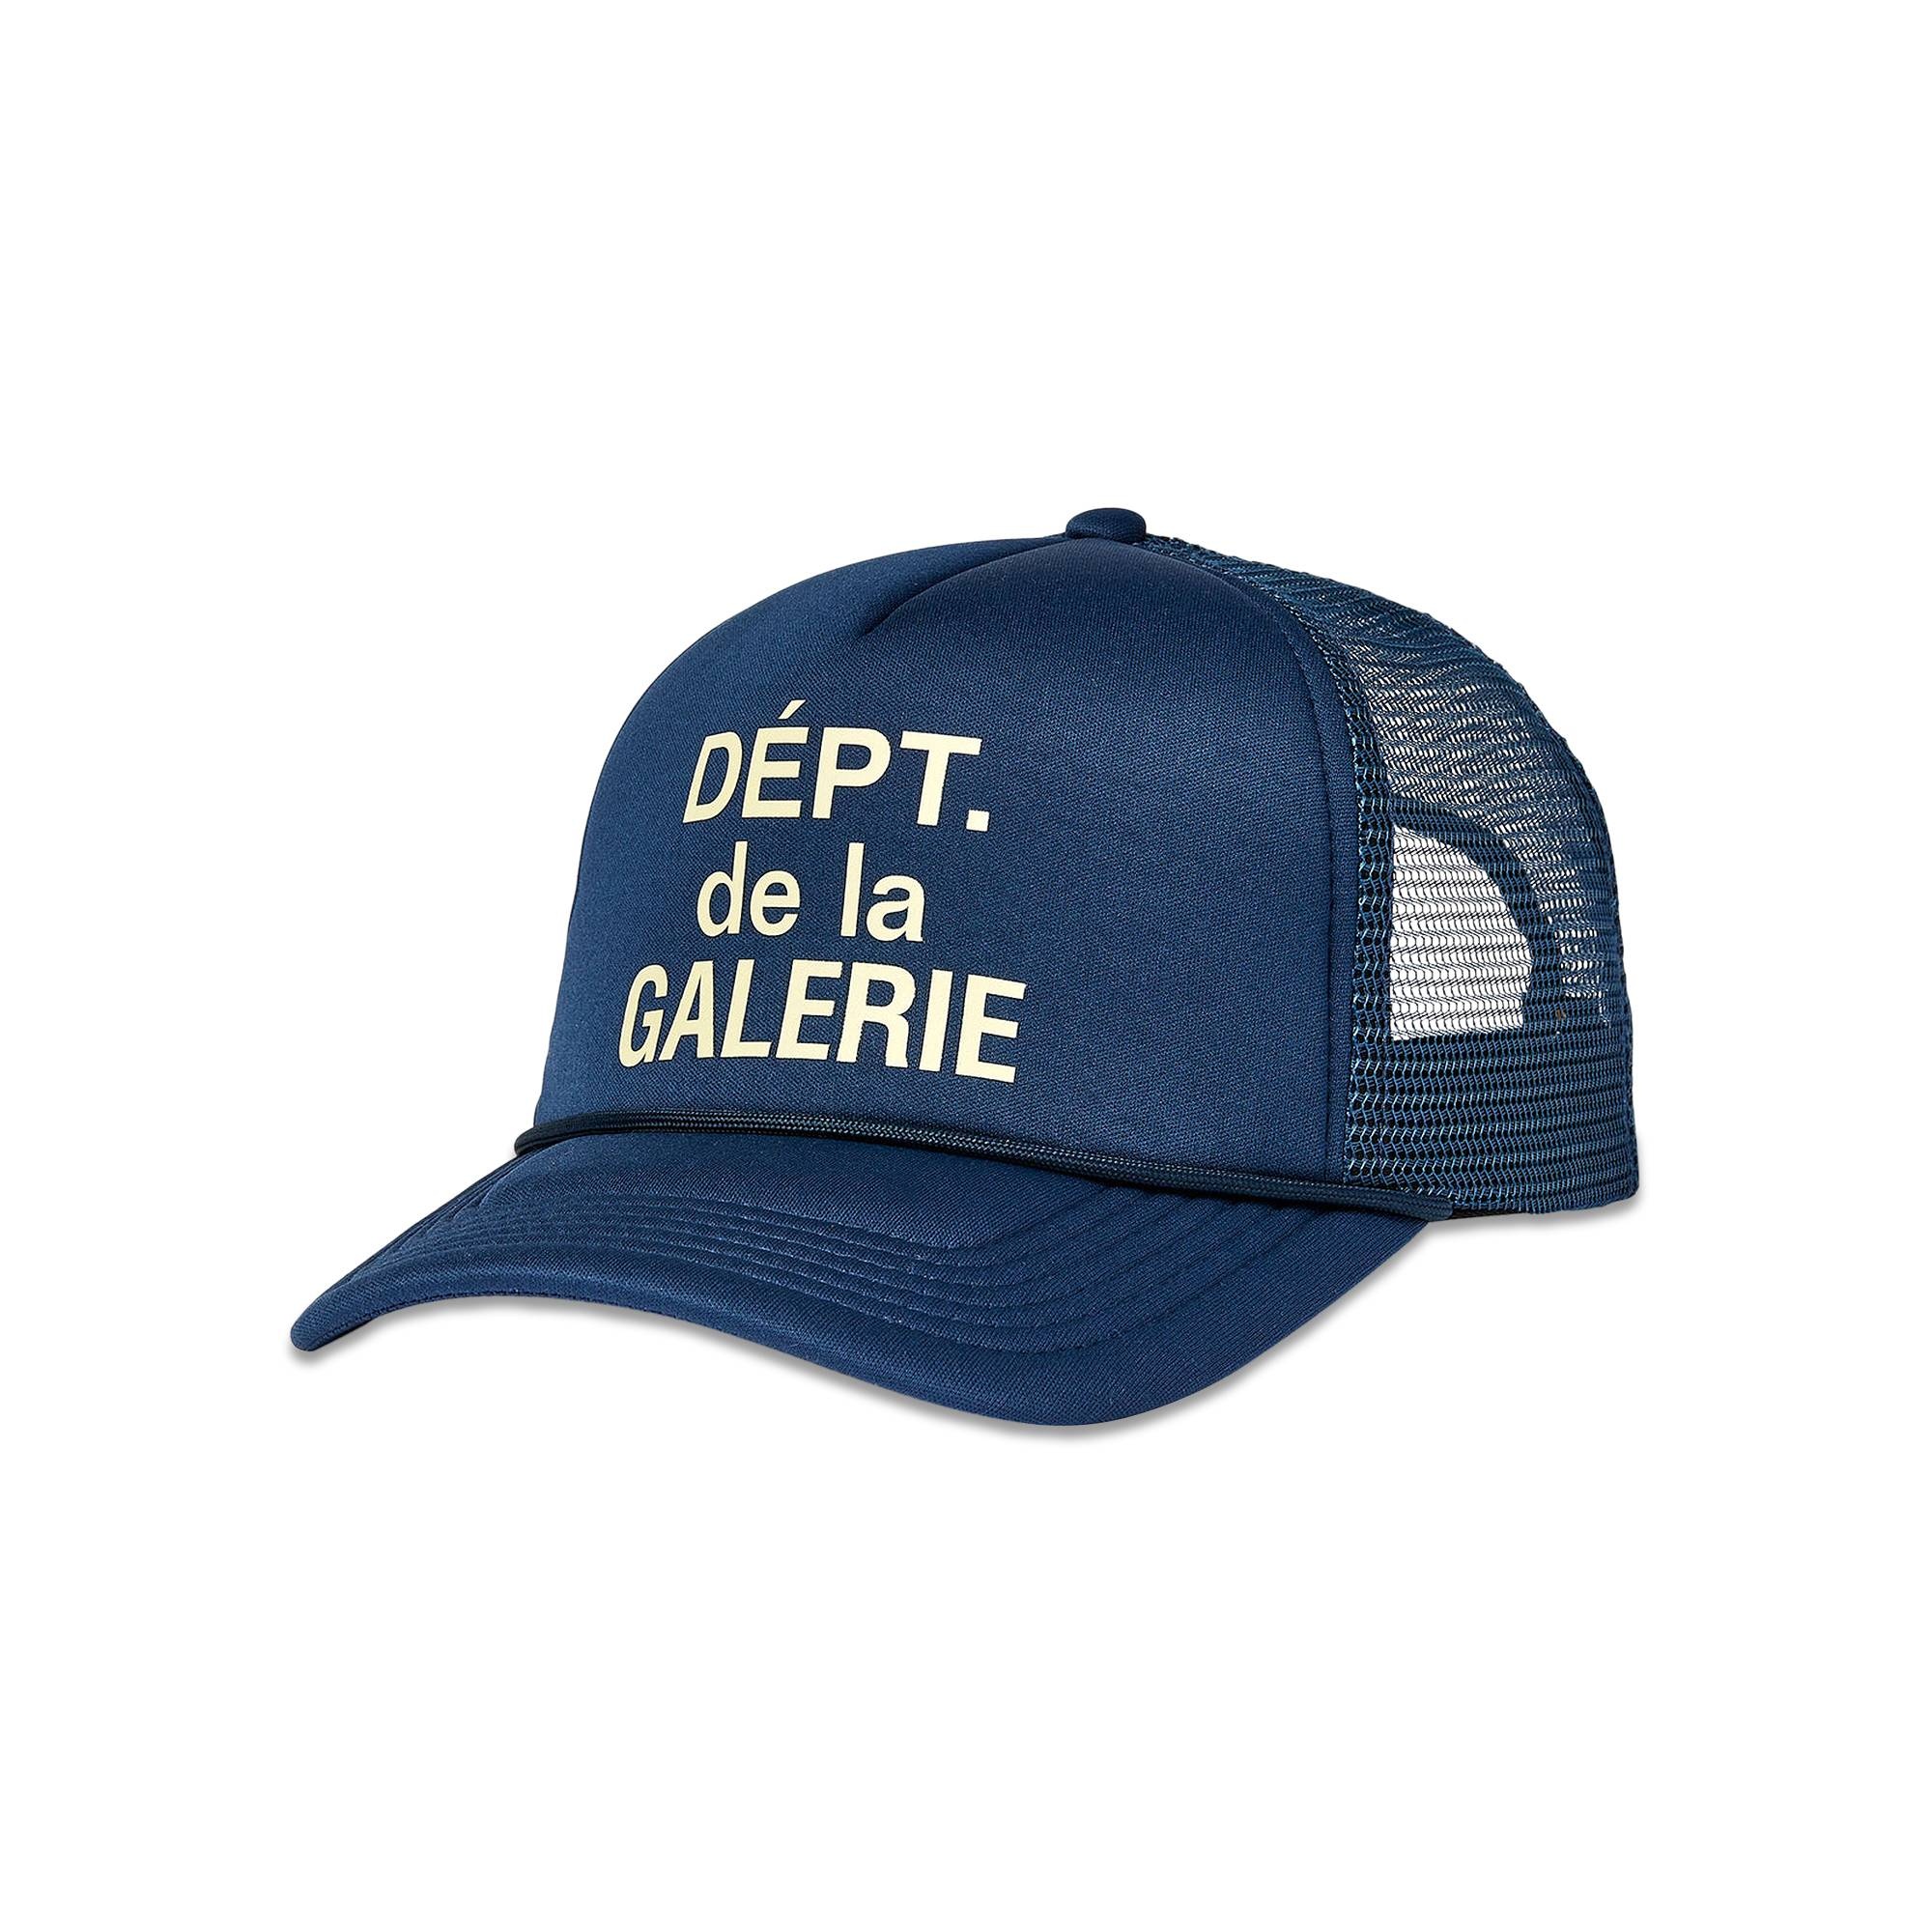 Gallery Dept. French Logo Trucker Hat 'Navy' - 1